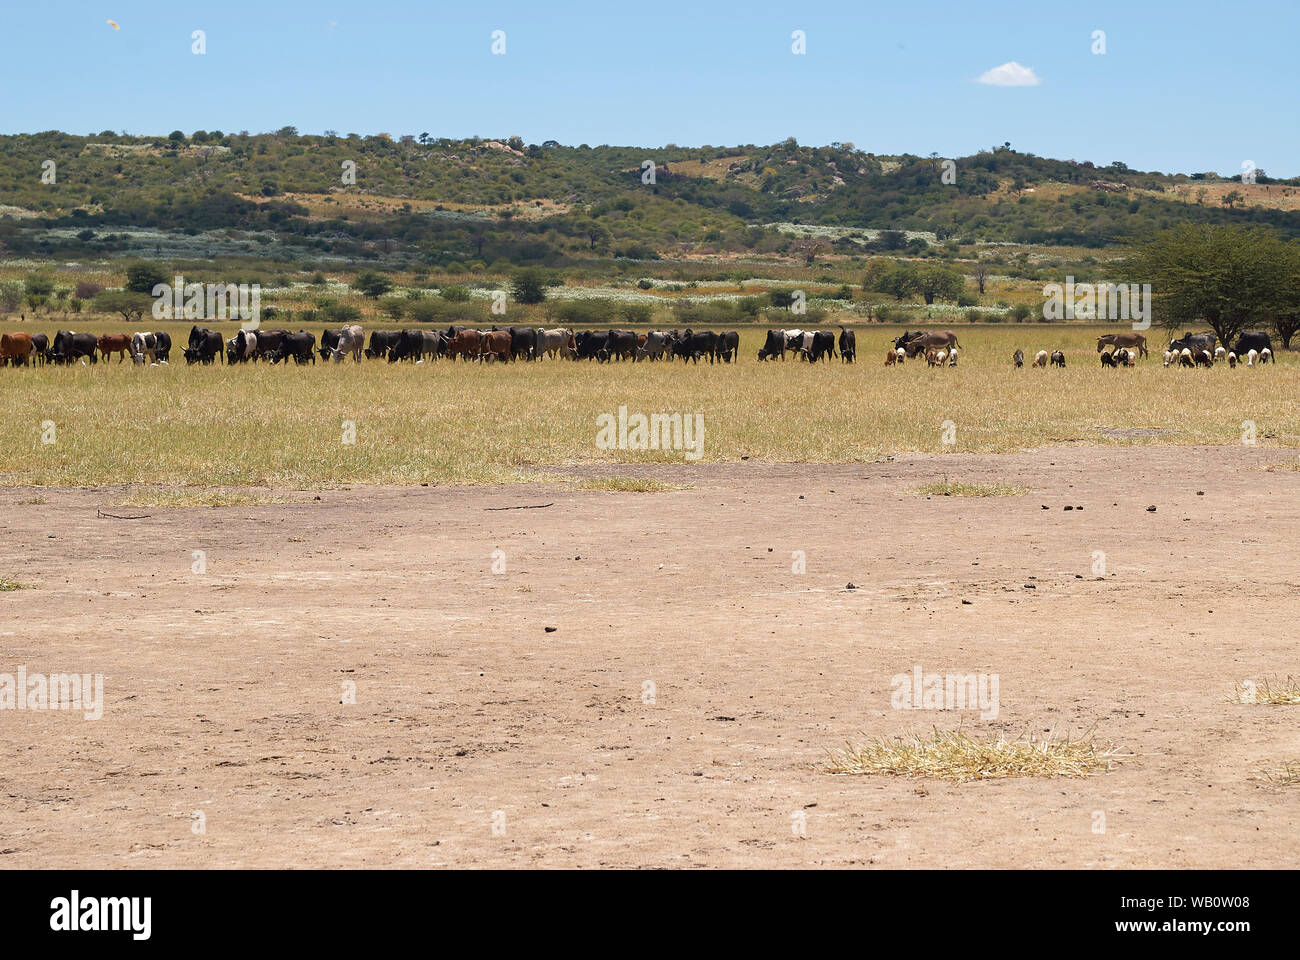 Livestock grazing near Dodoma on the Tanzanian central plane Stock Photo